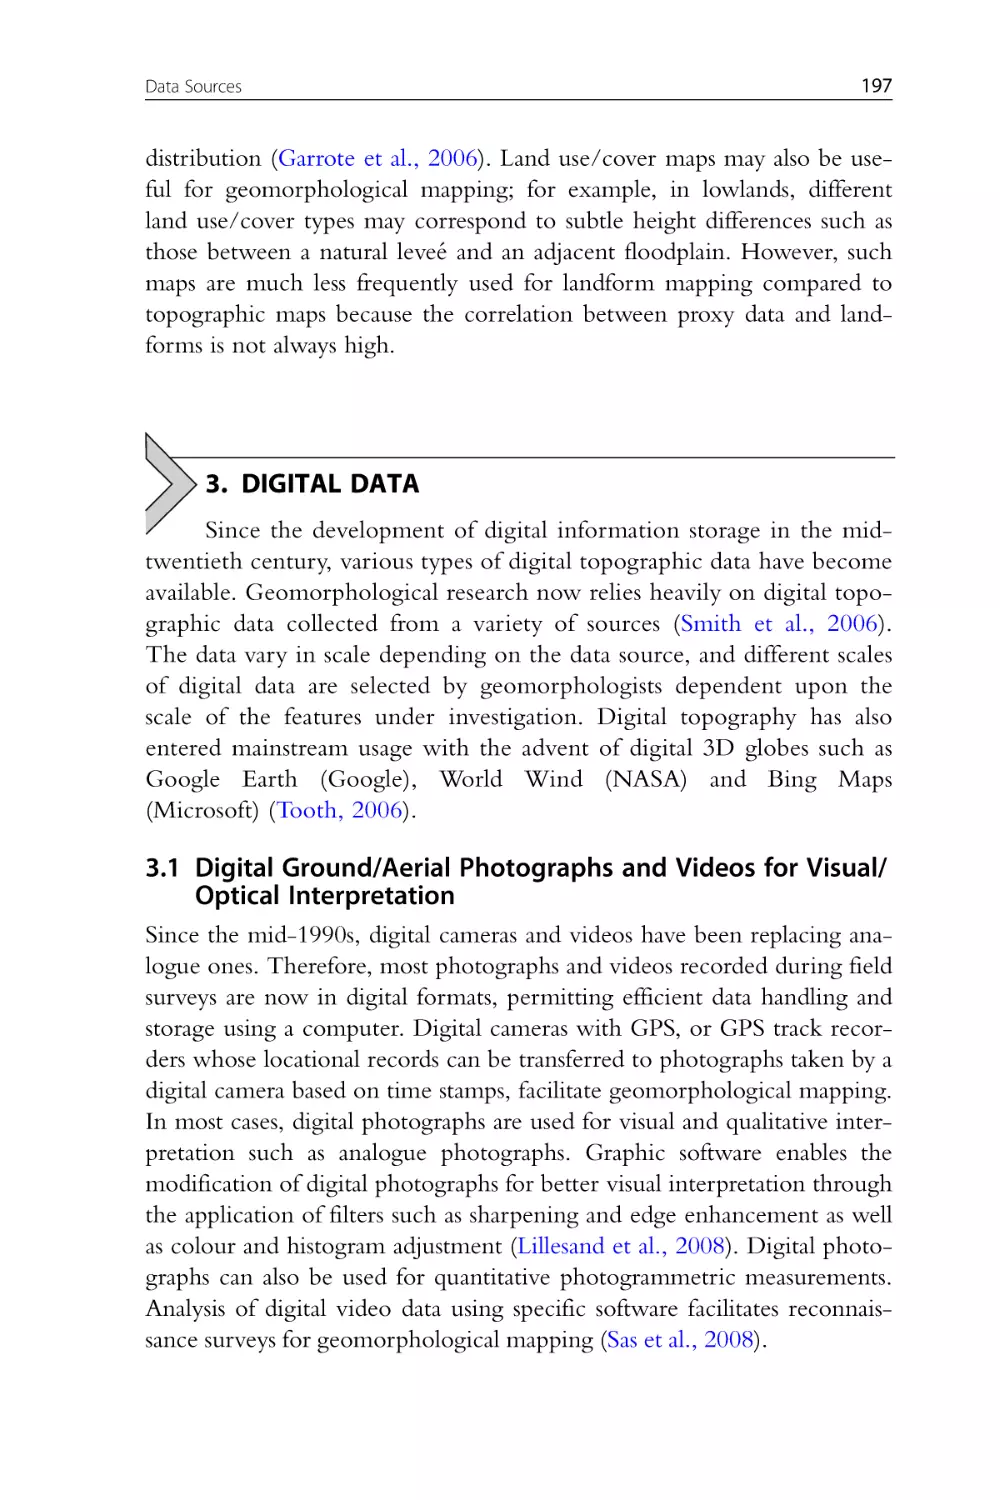 3. Digital Data
3.1 Digital Ground/Aerial Photographs and Videos for Visual/Optical Interpretation